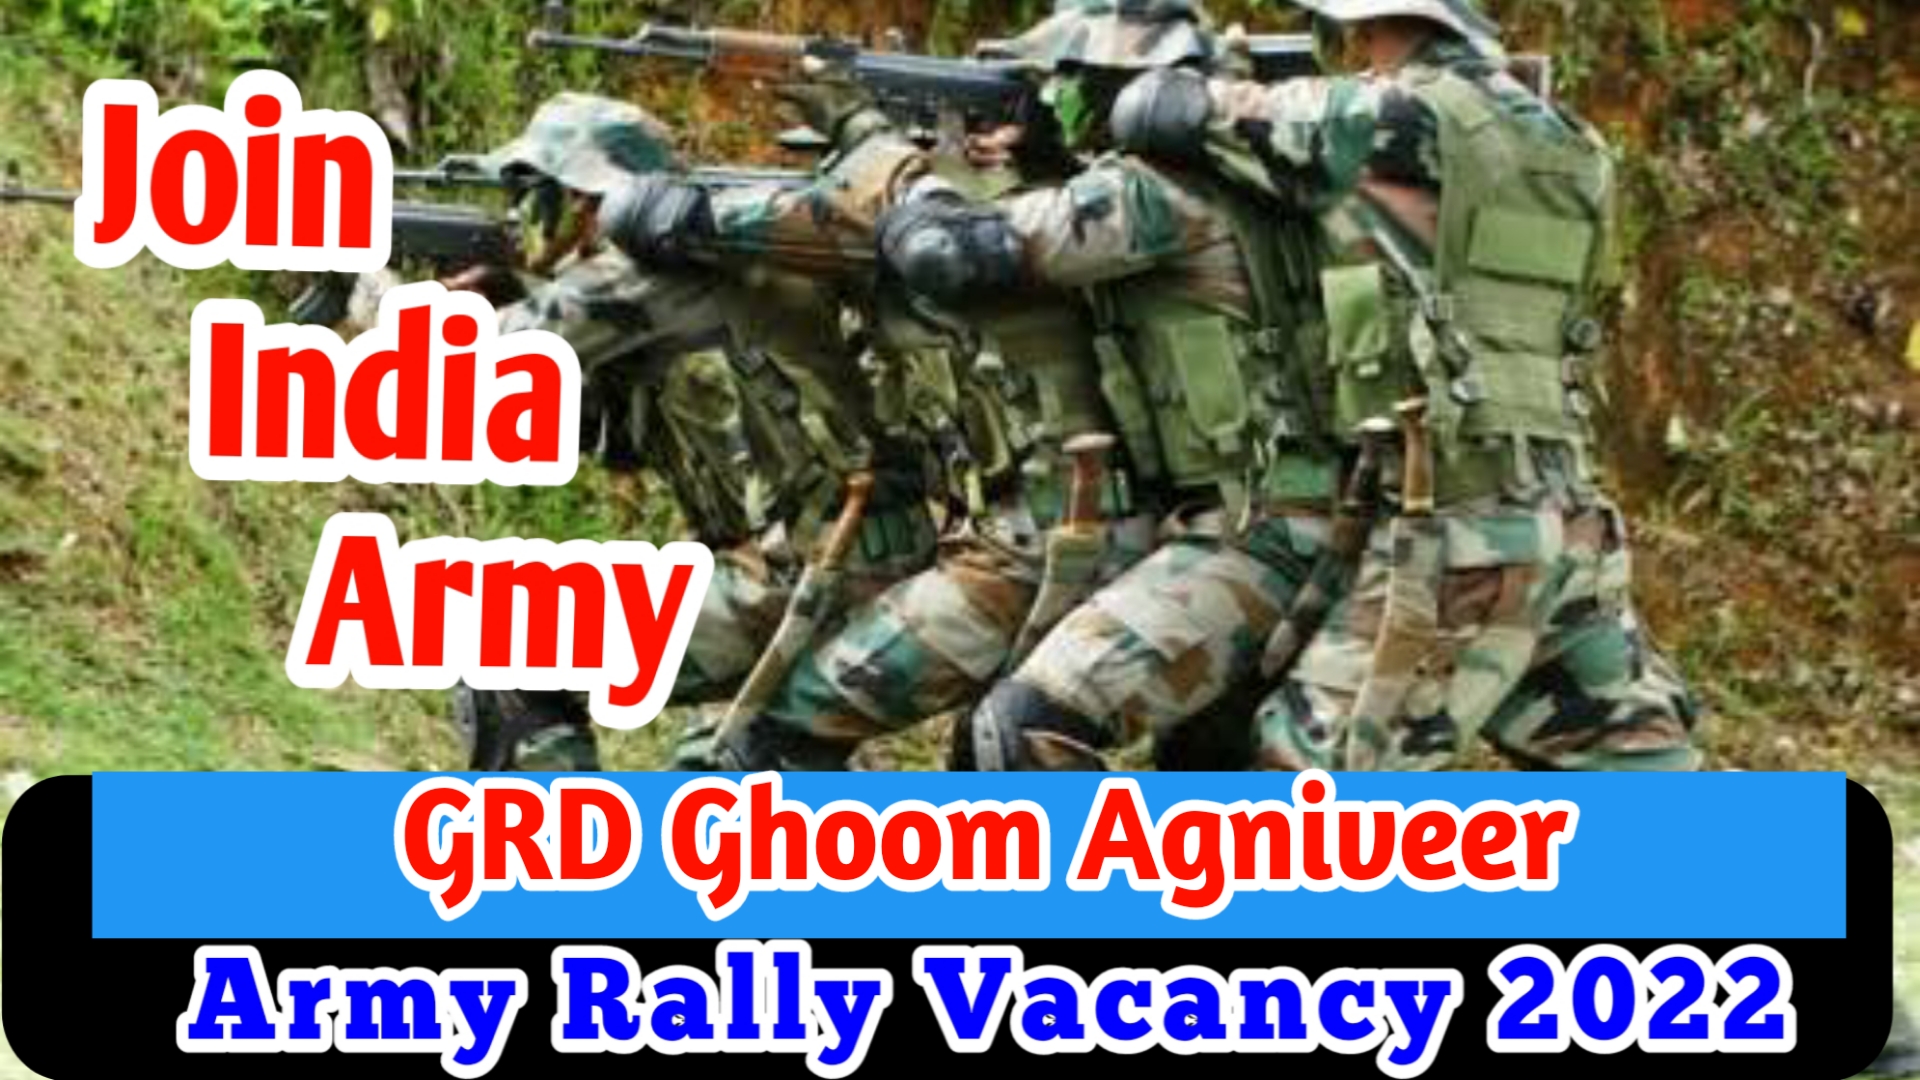 GRD Ghoom Agniveer Army Rally Vacancy 2022